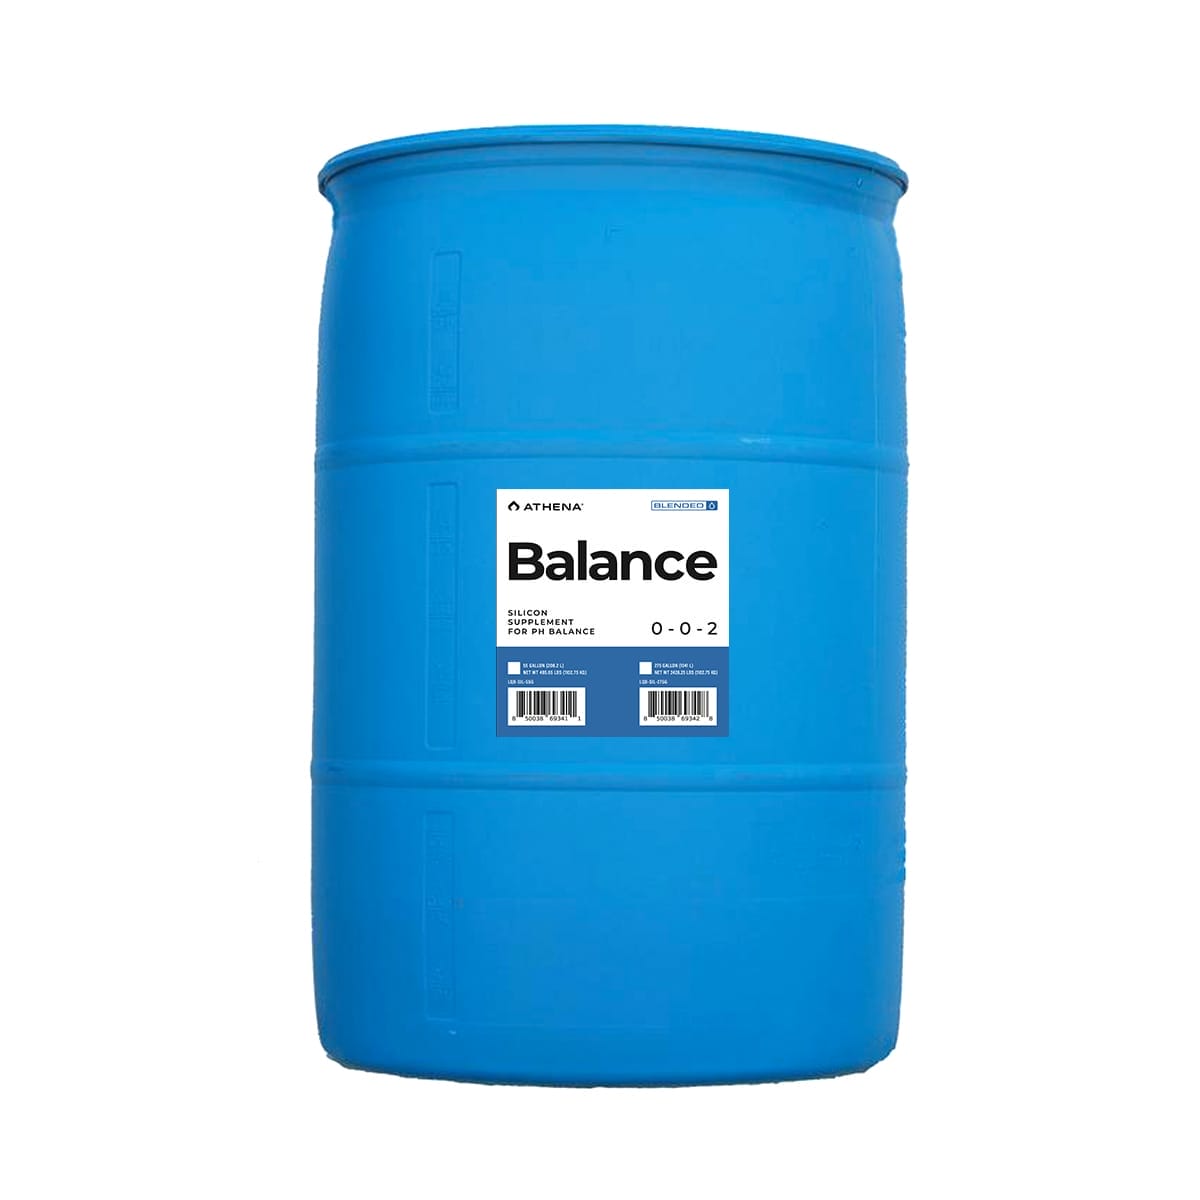 Athena Balance 55 Gallon